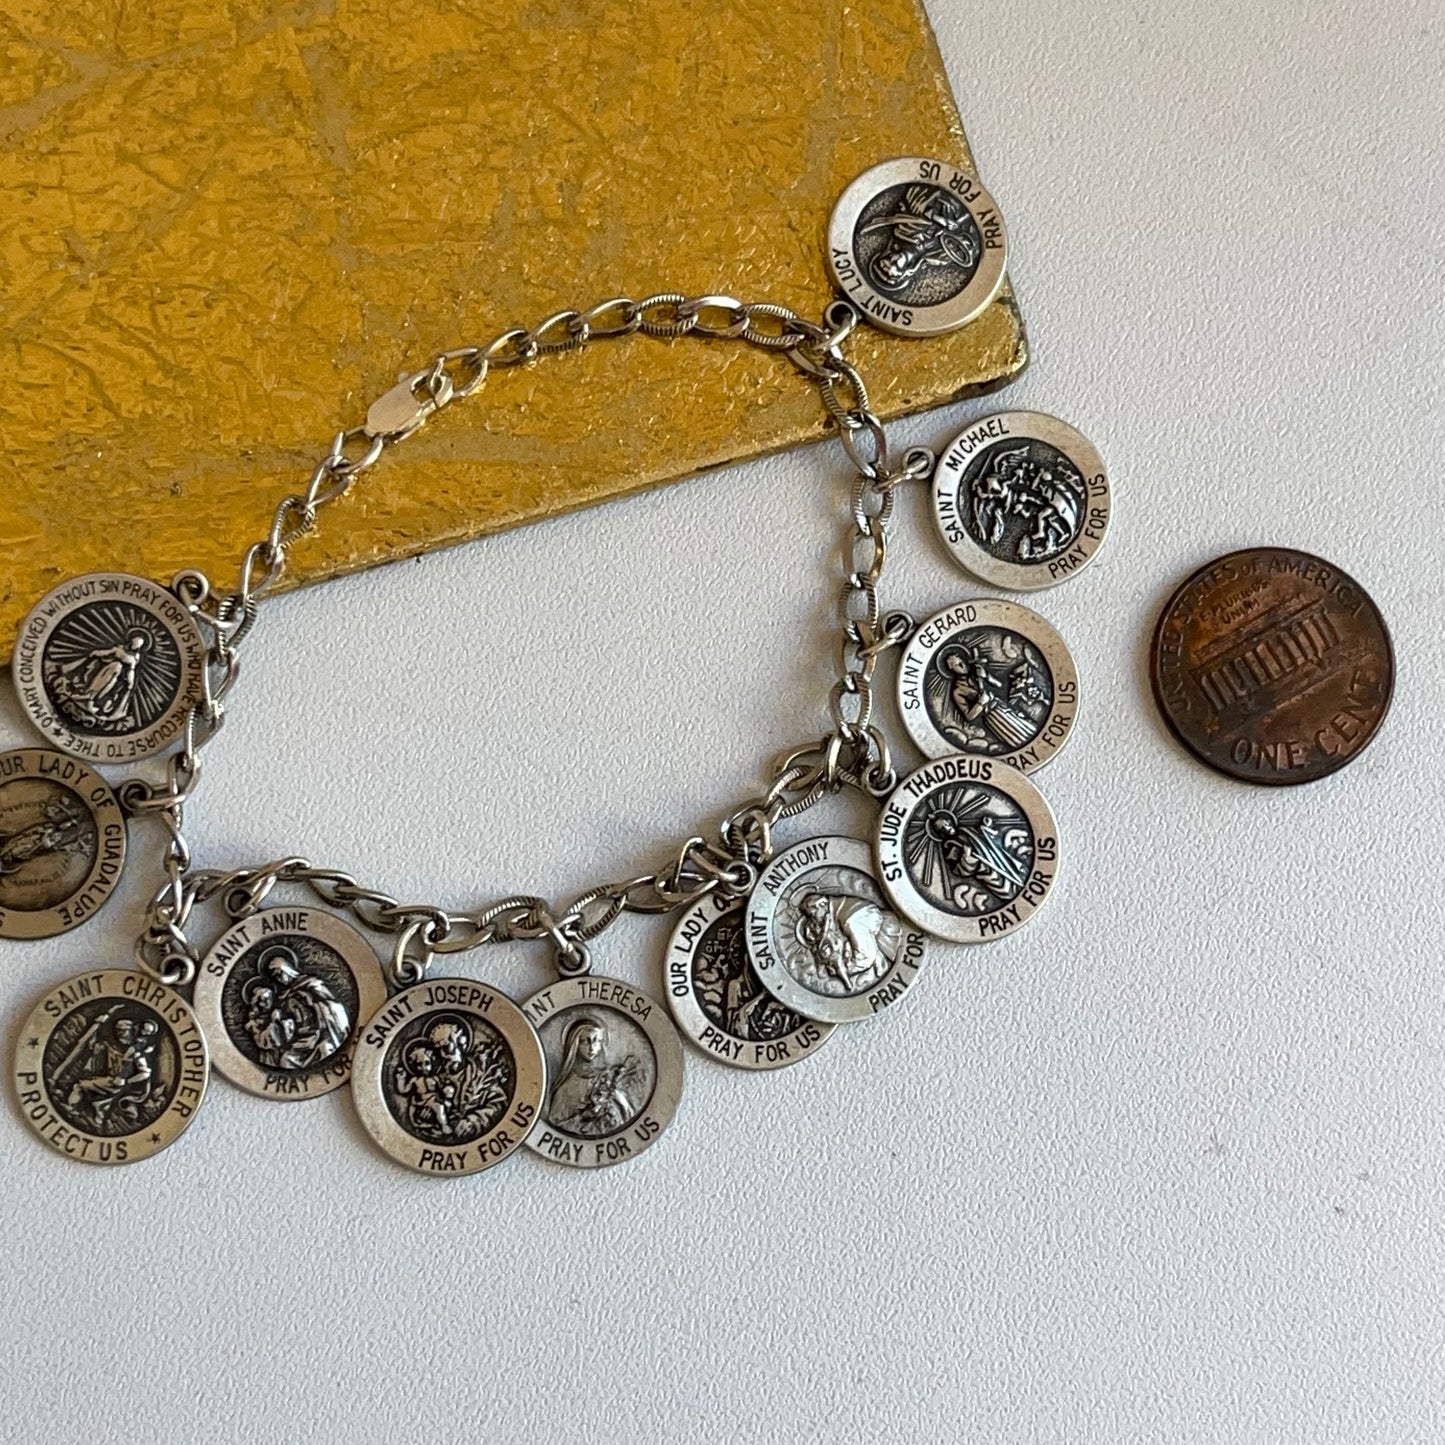 Sterling Silver Antiqued Patron Catholic Saints Medals Link Charm Bracelet 7.5"